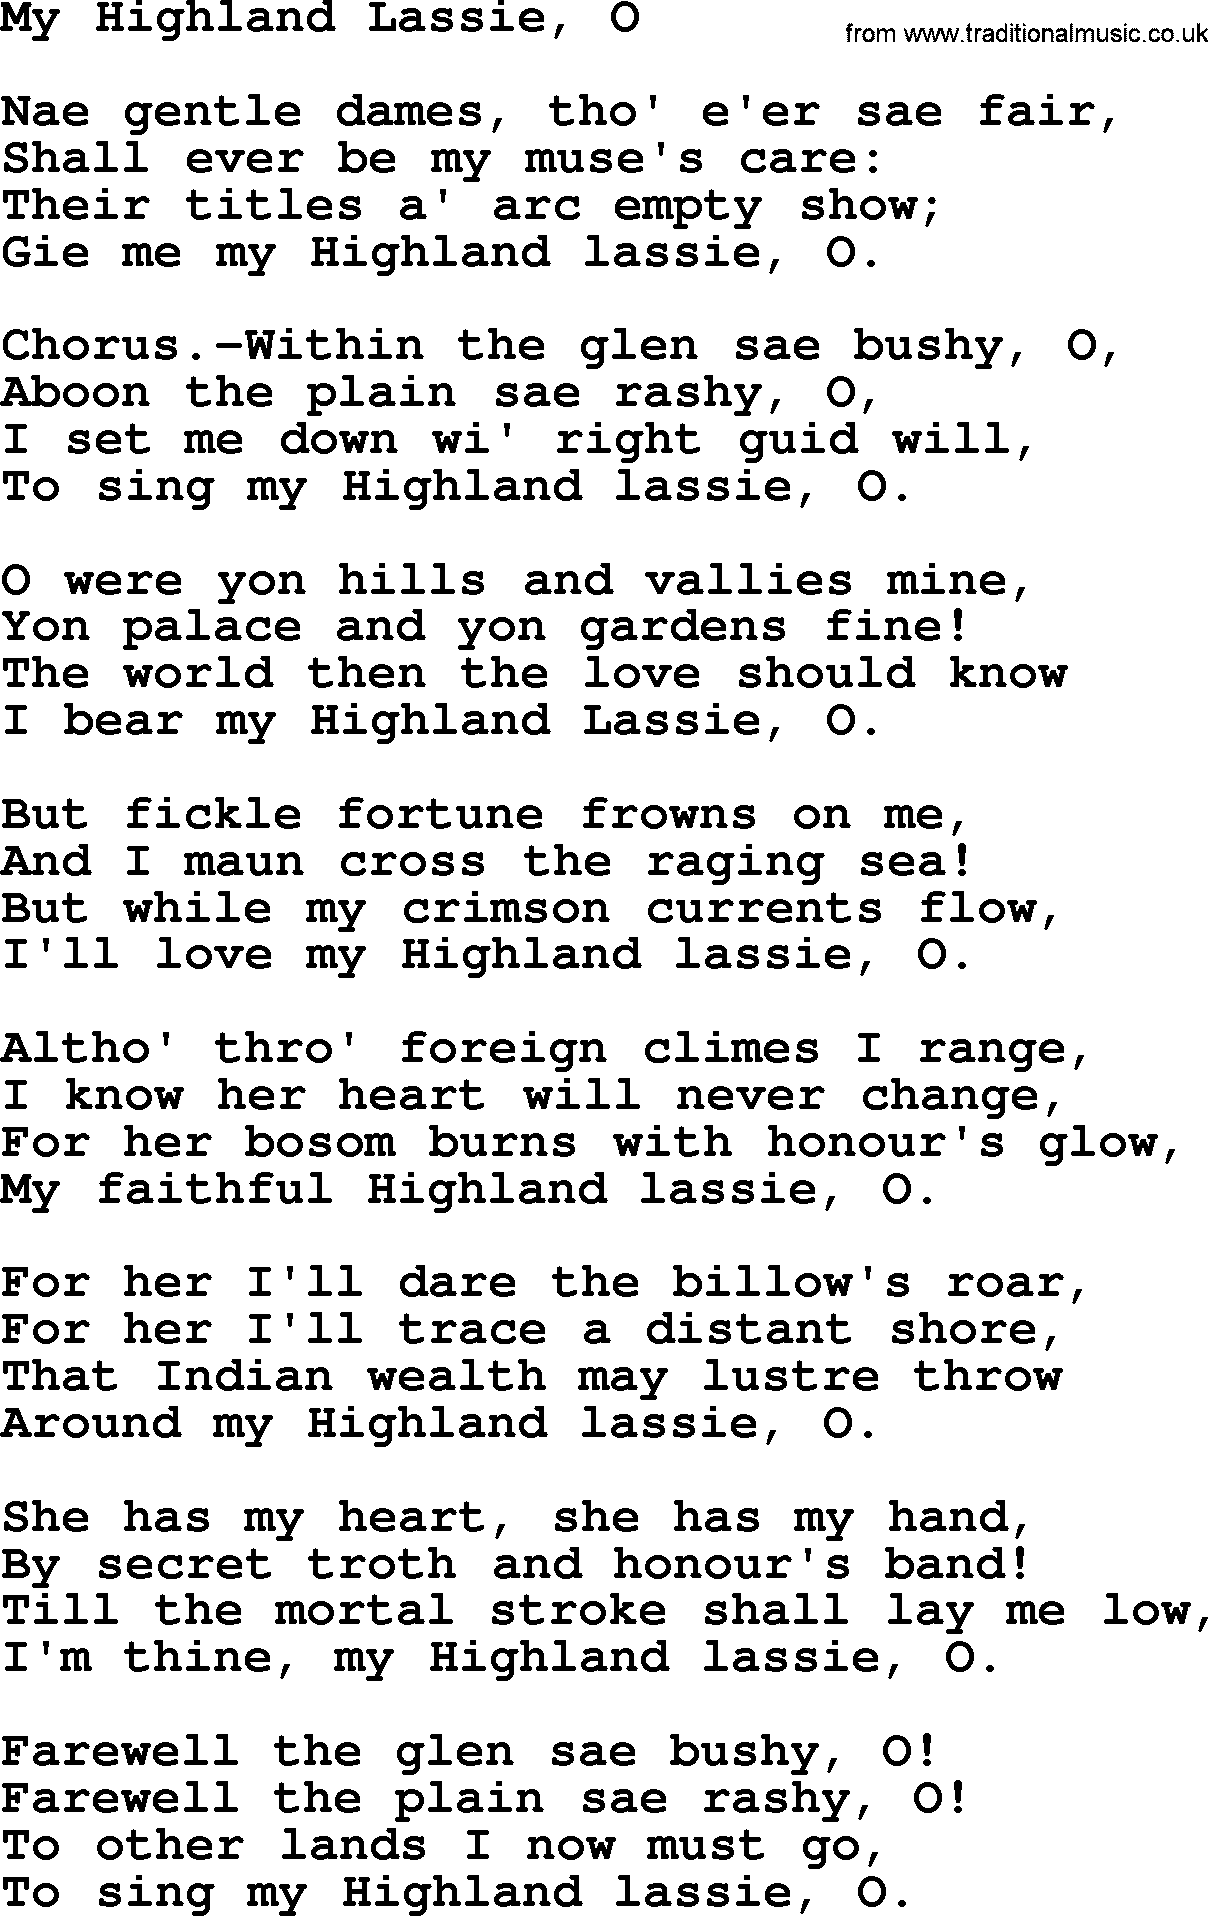 Robert Burns Songs & Lyrics: My Highland Lassie, O